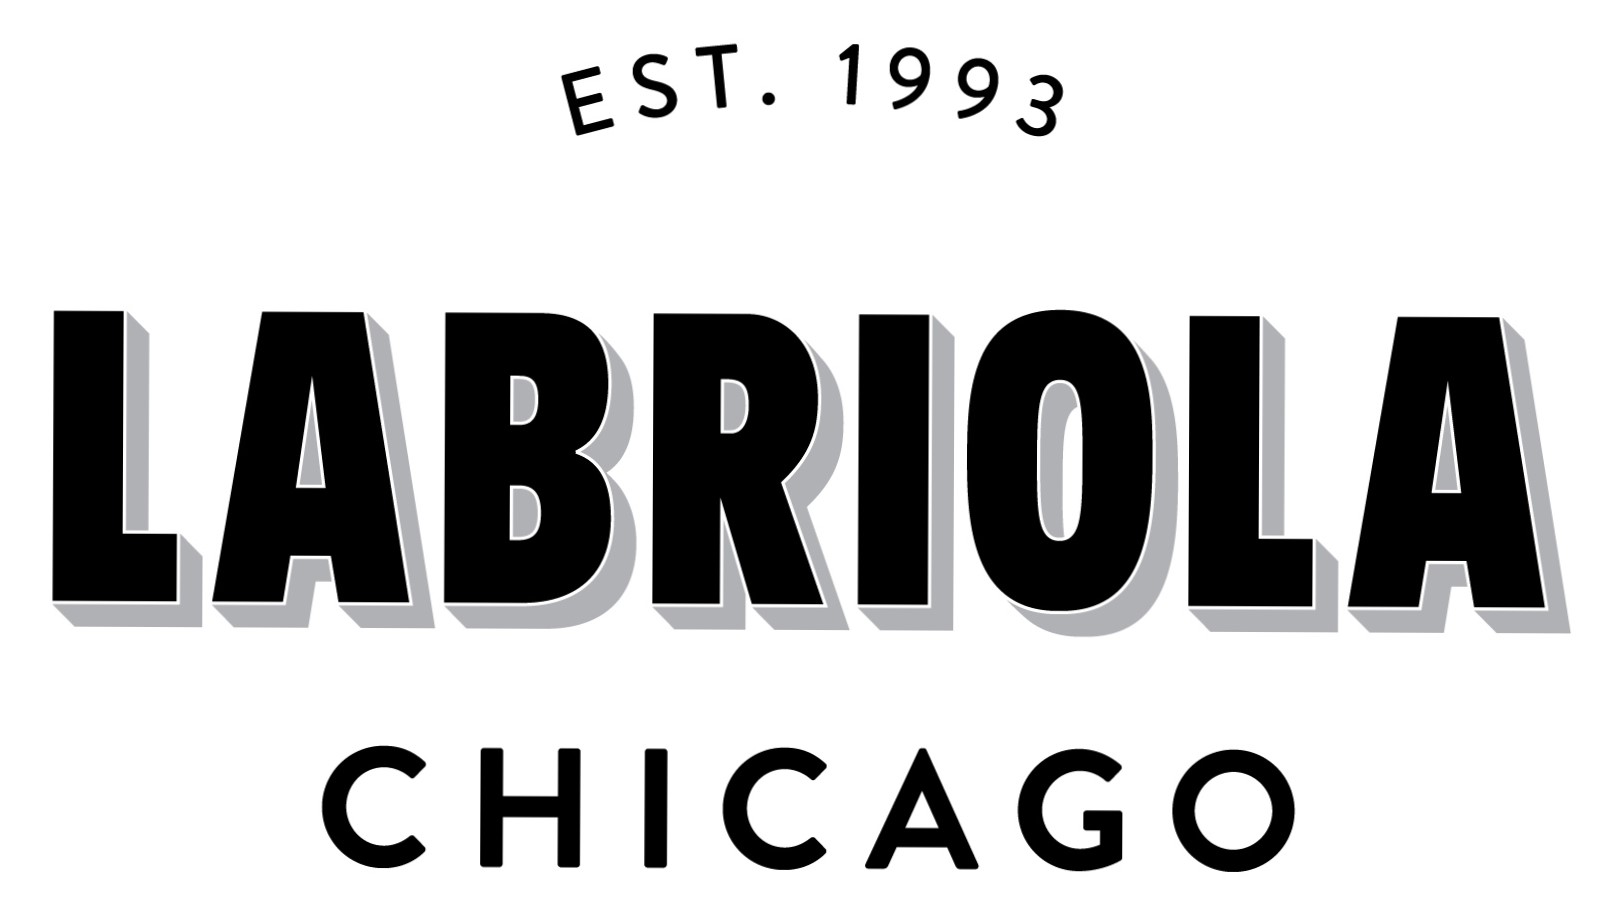 Labriola Chicago Farmer's Market food truck profile image